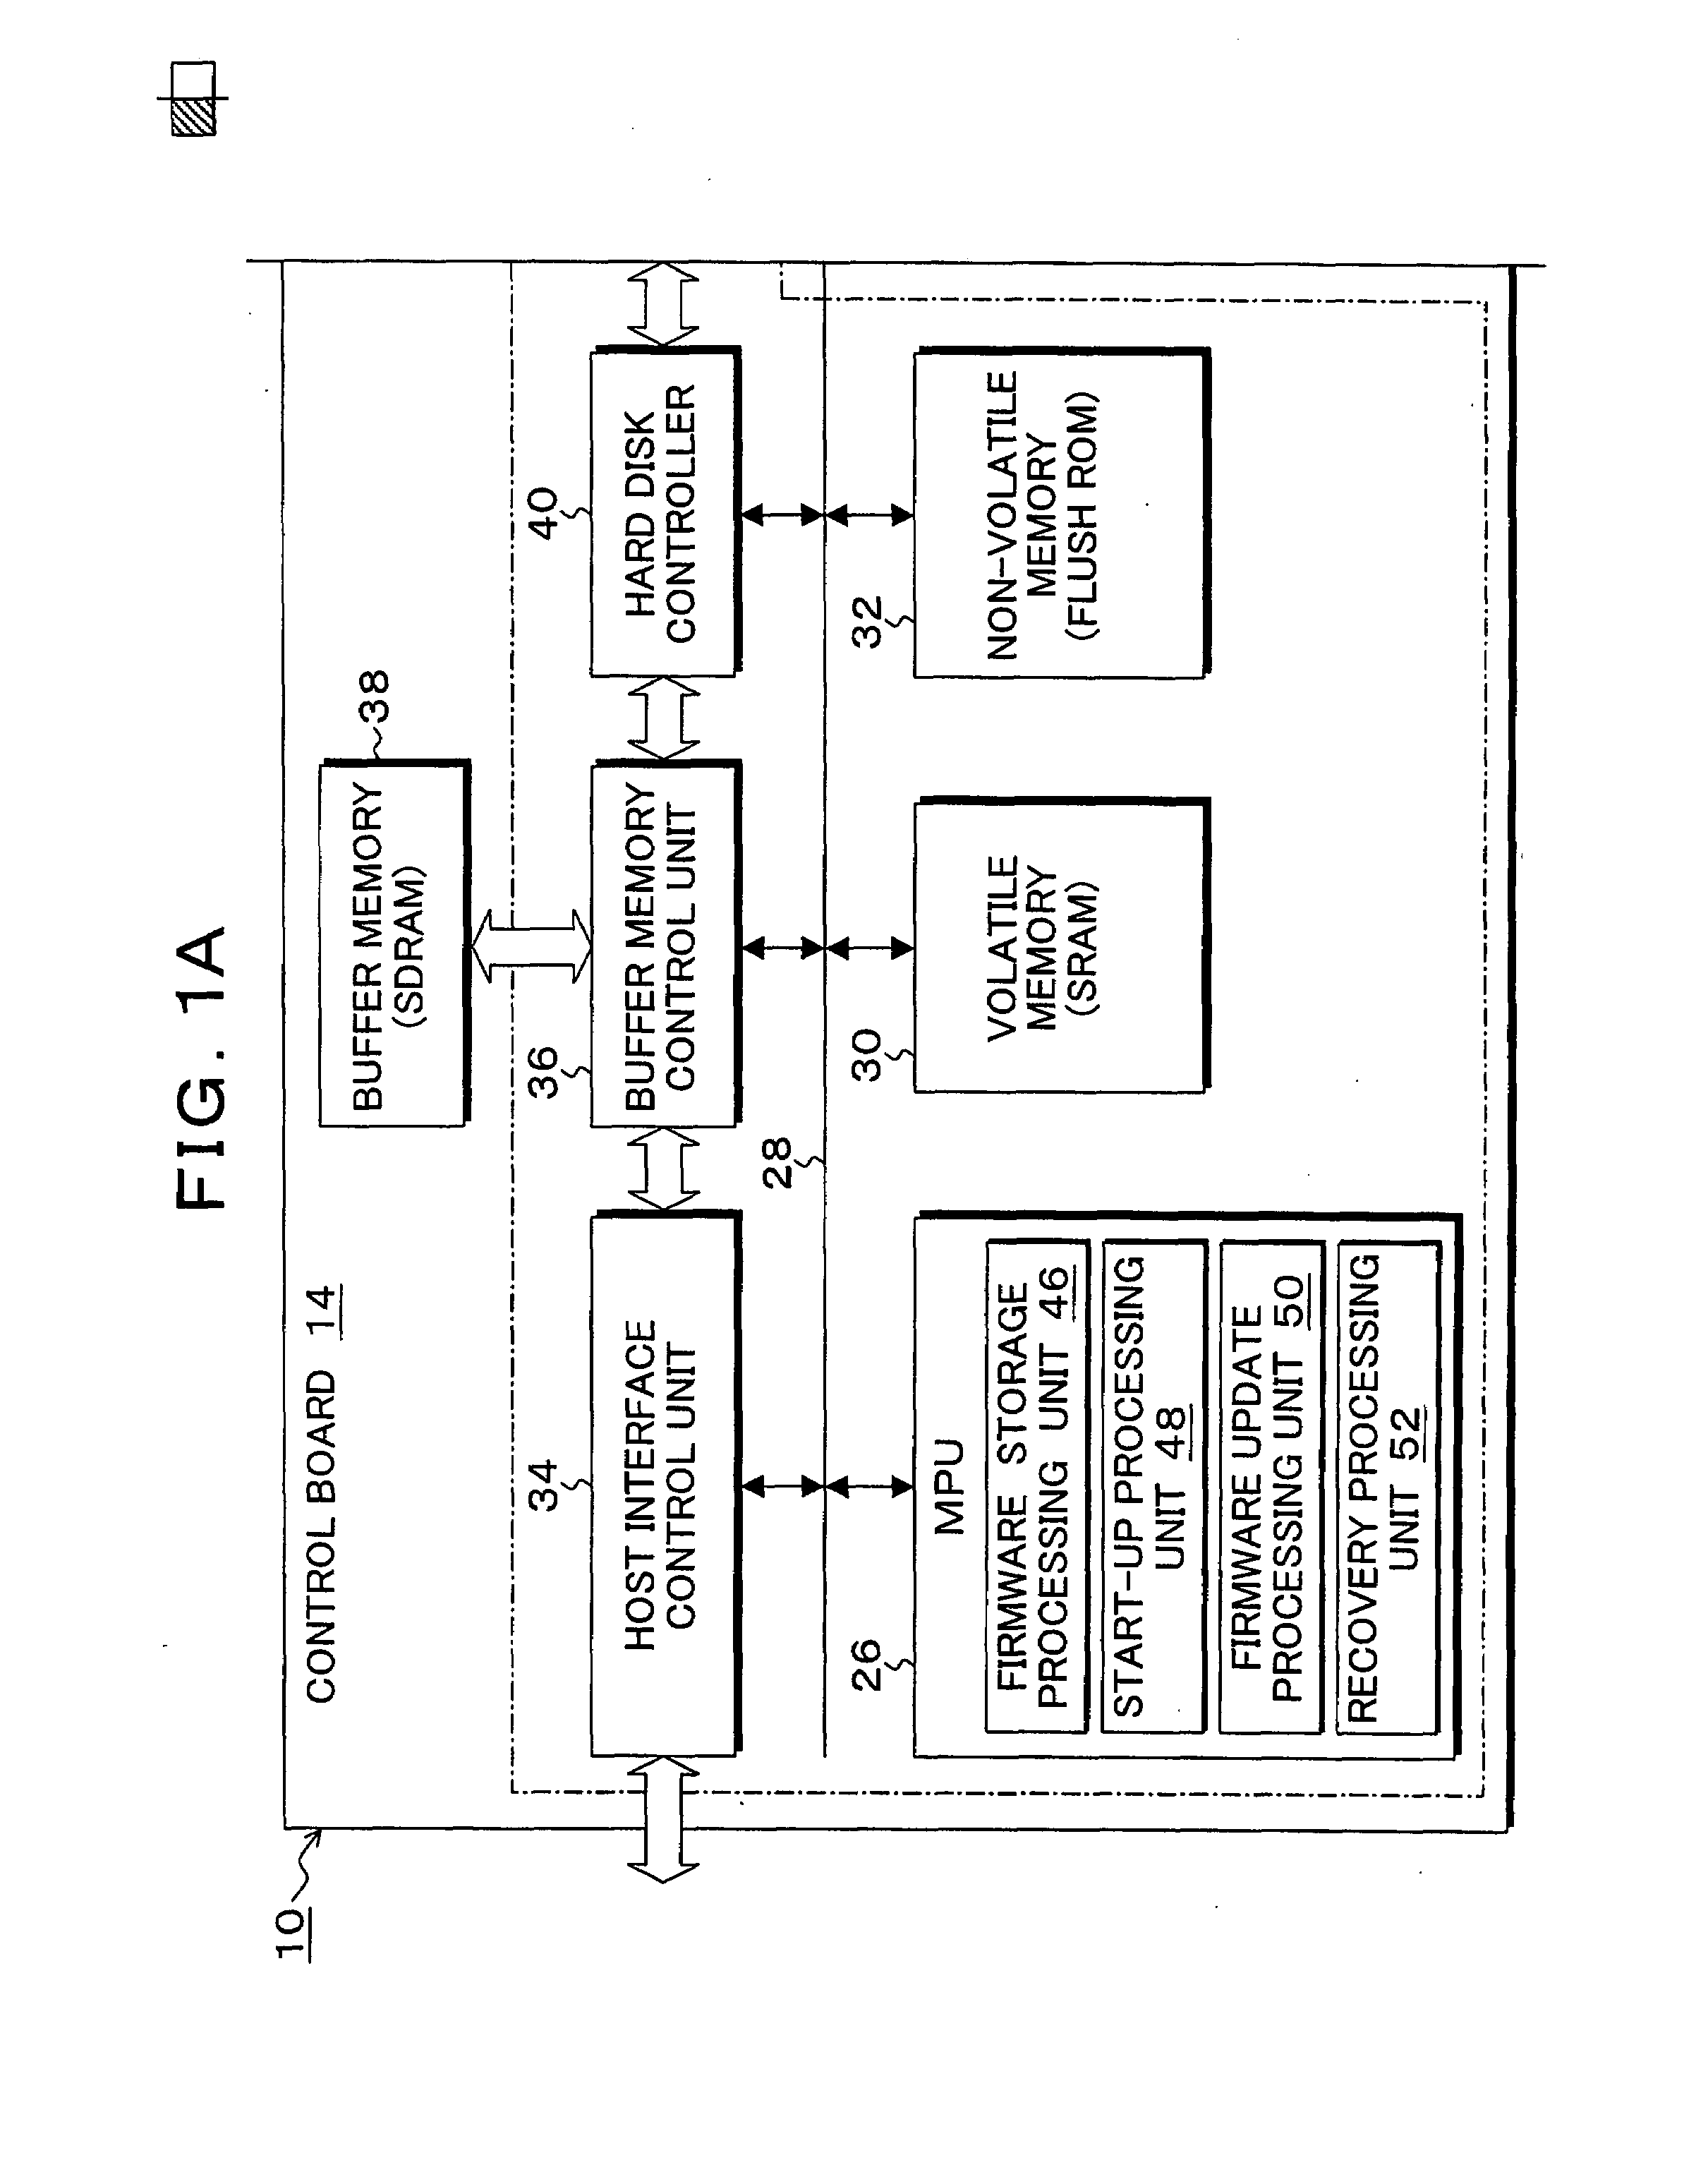 Storage apparatus, control method, and control device